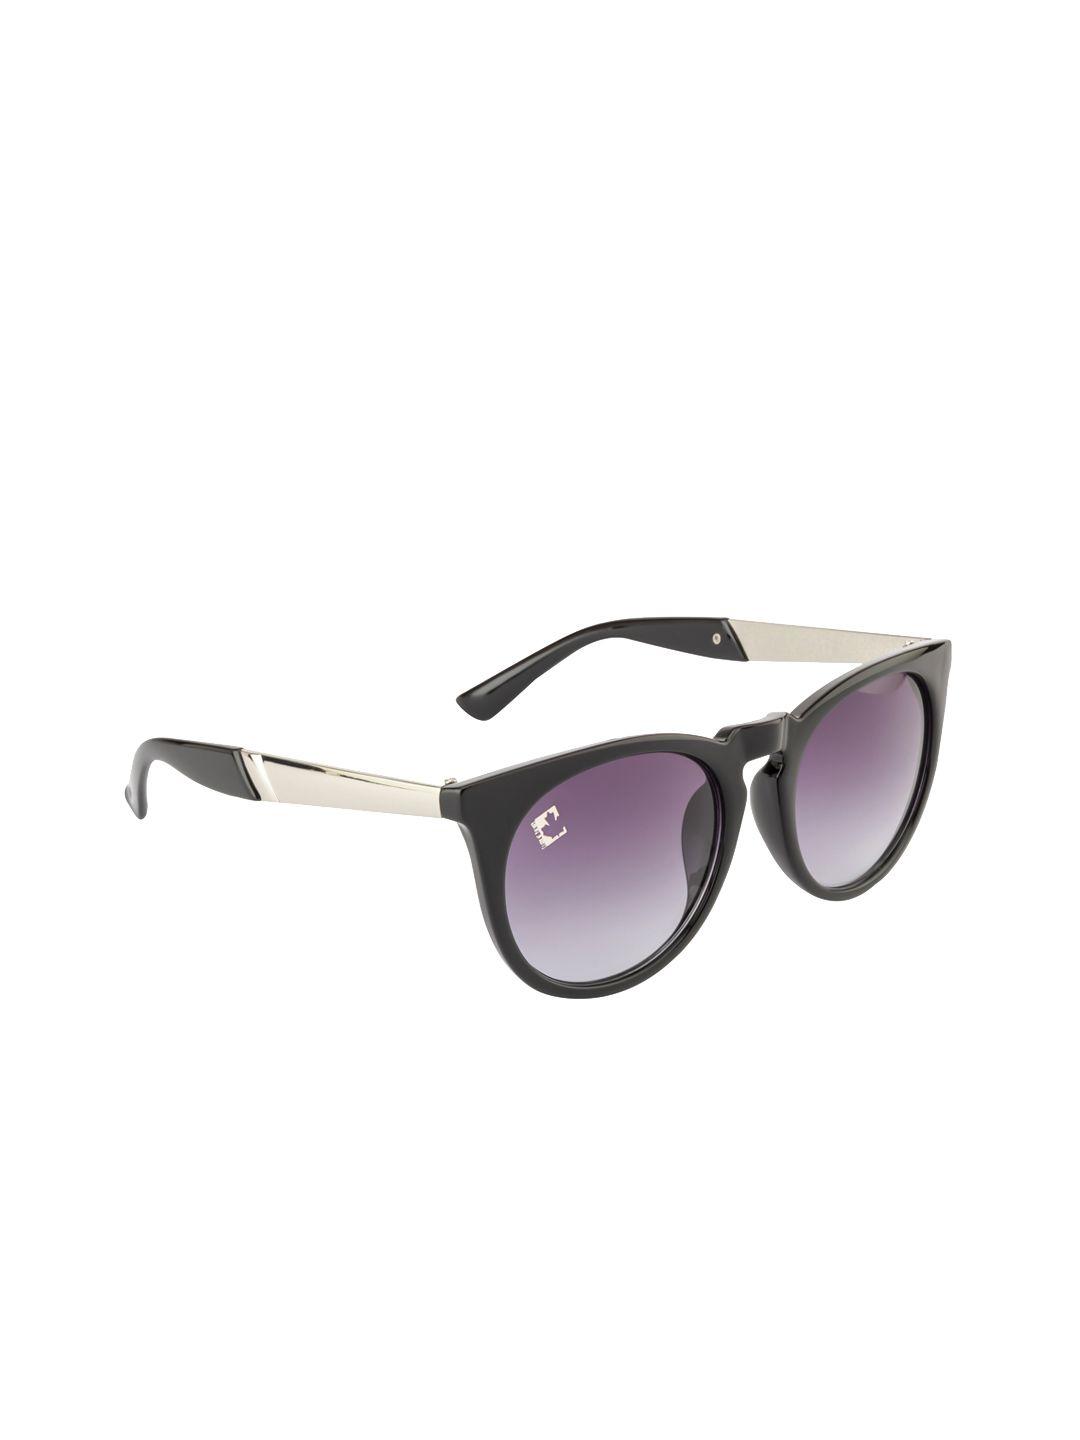 clark n palmer unisex oval sunglasses cnp-1076-c1